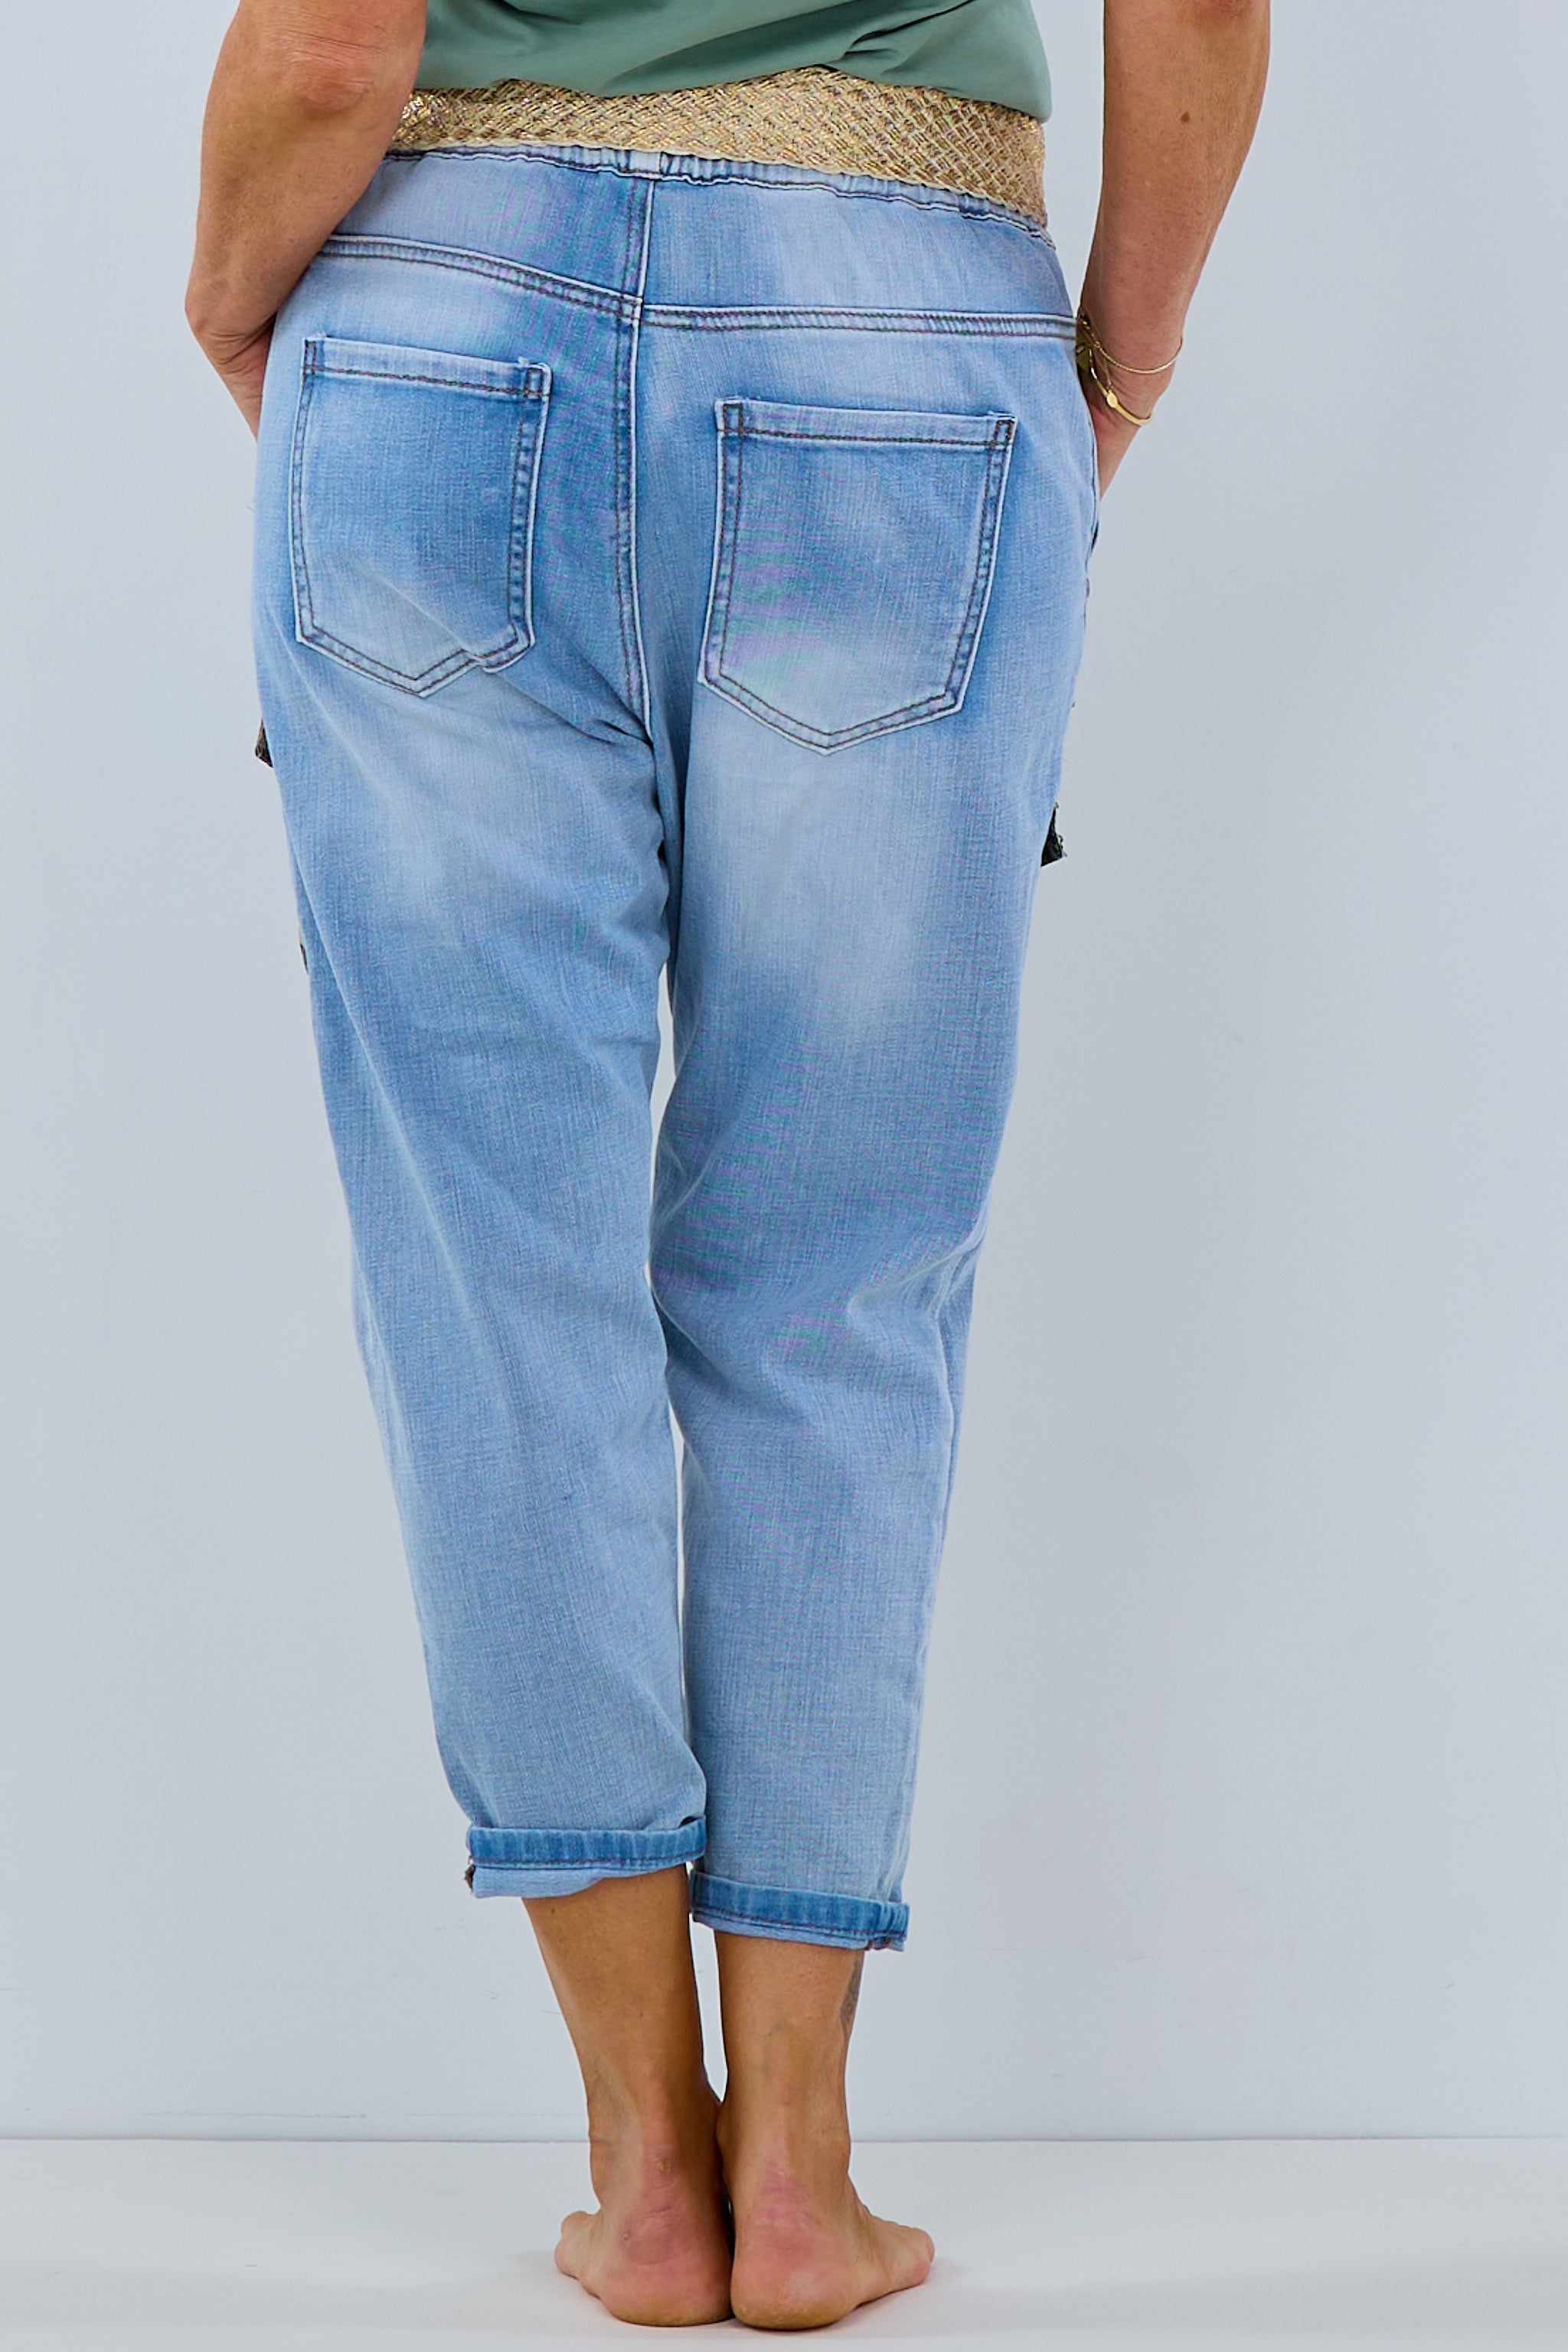 Damen Jeans mit Patches Trends & Lifestyle